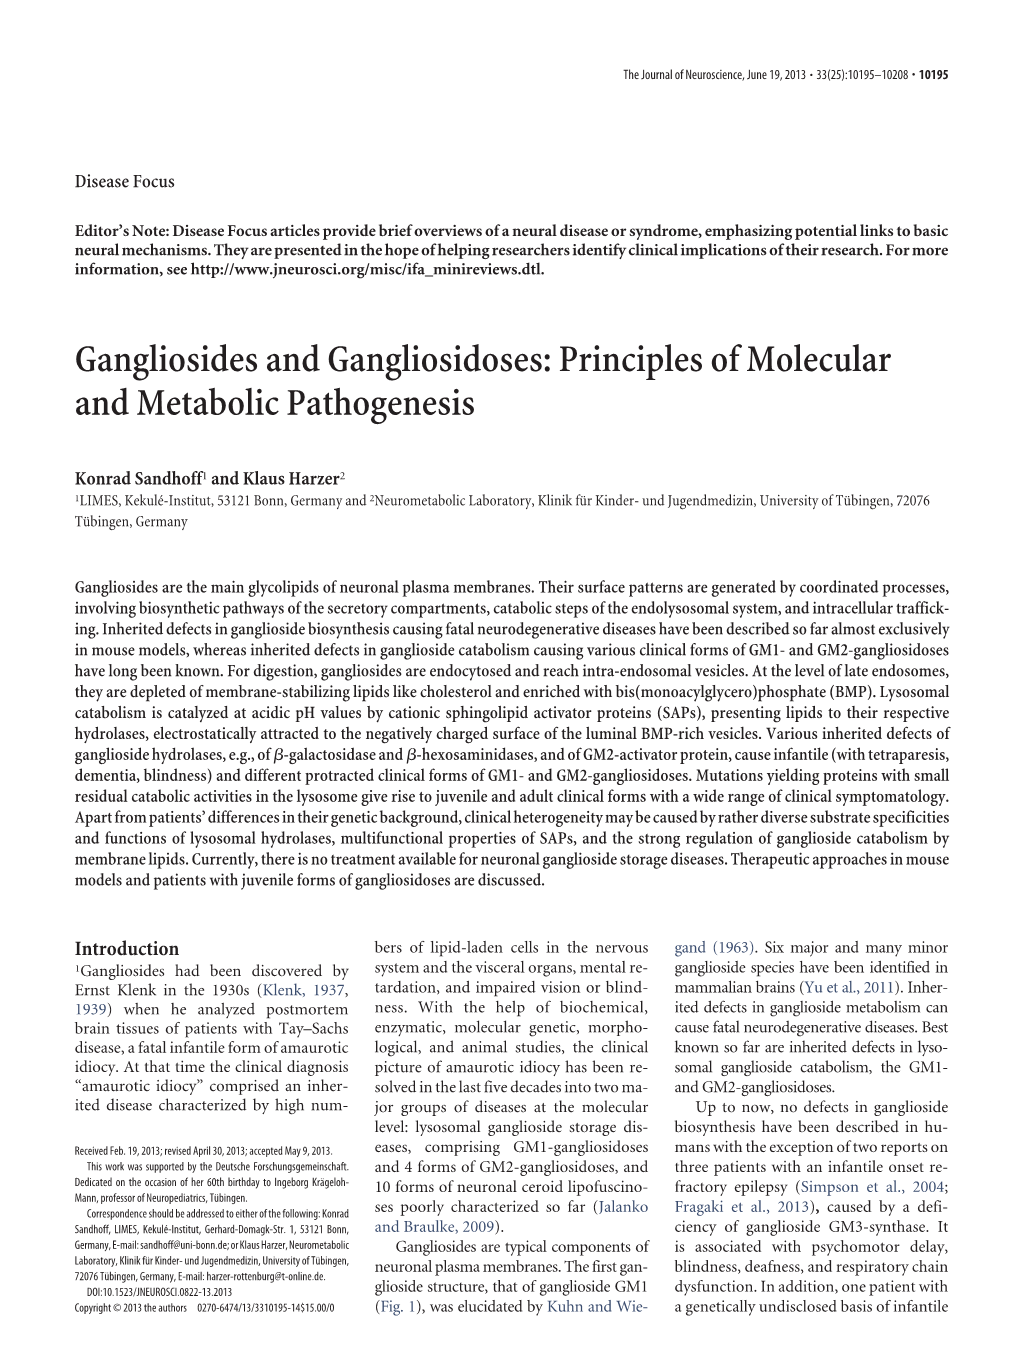 Principles of Molecular and Metabolic Pathogenesis